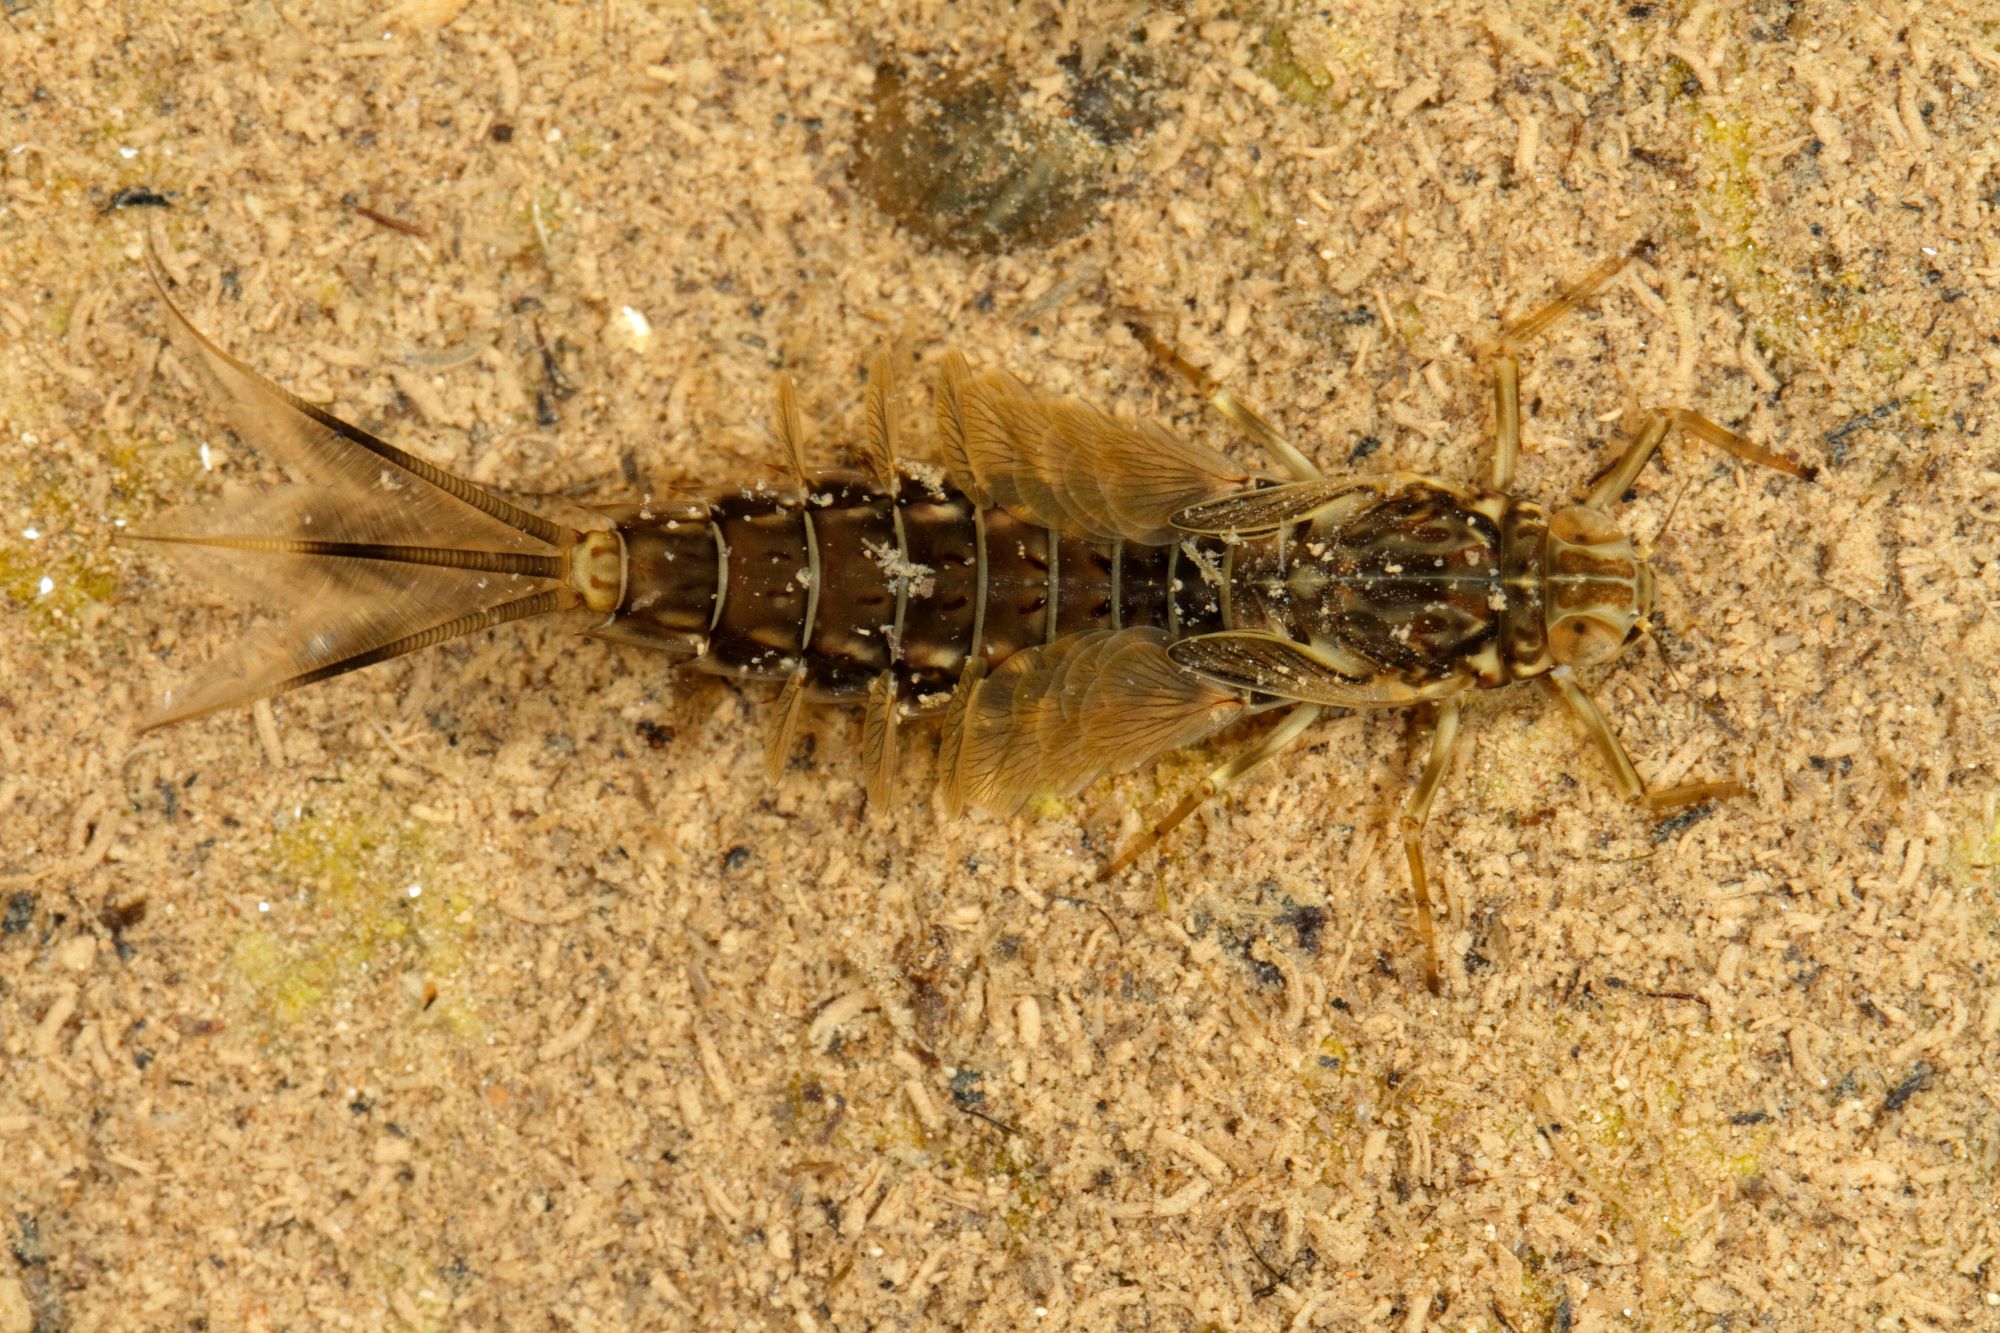 a dragonfly larva